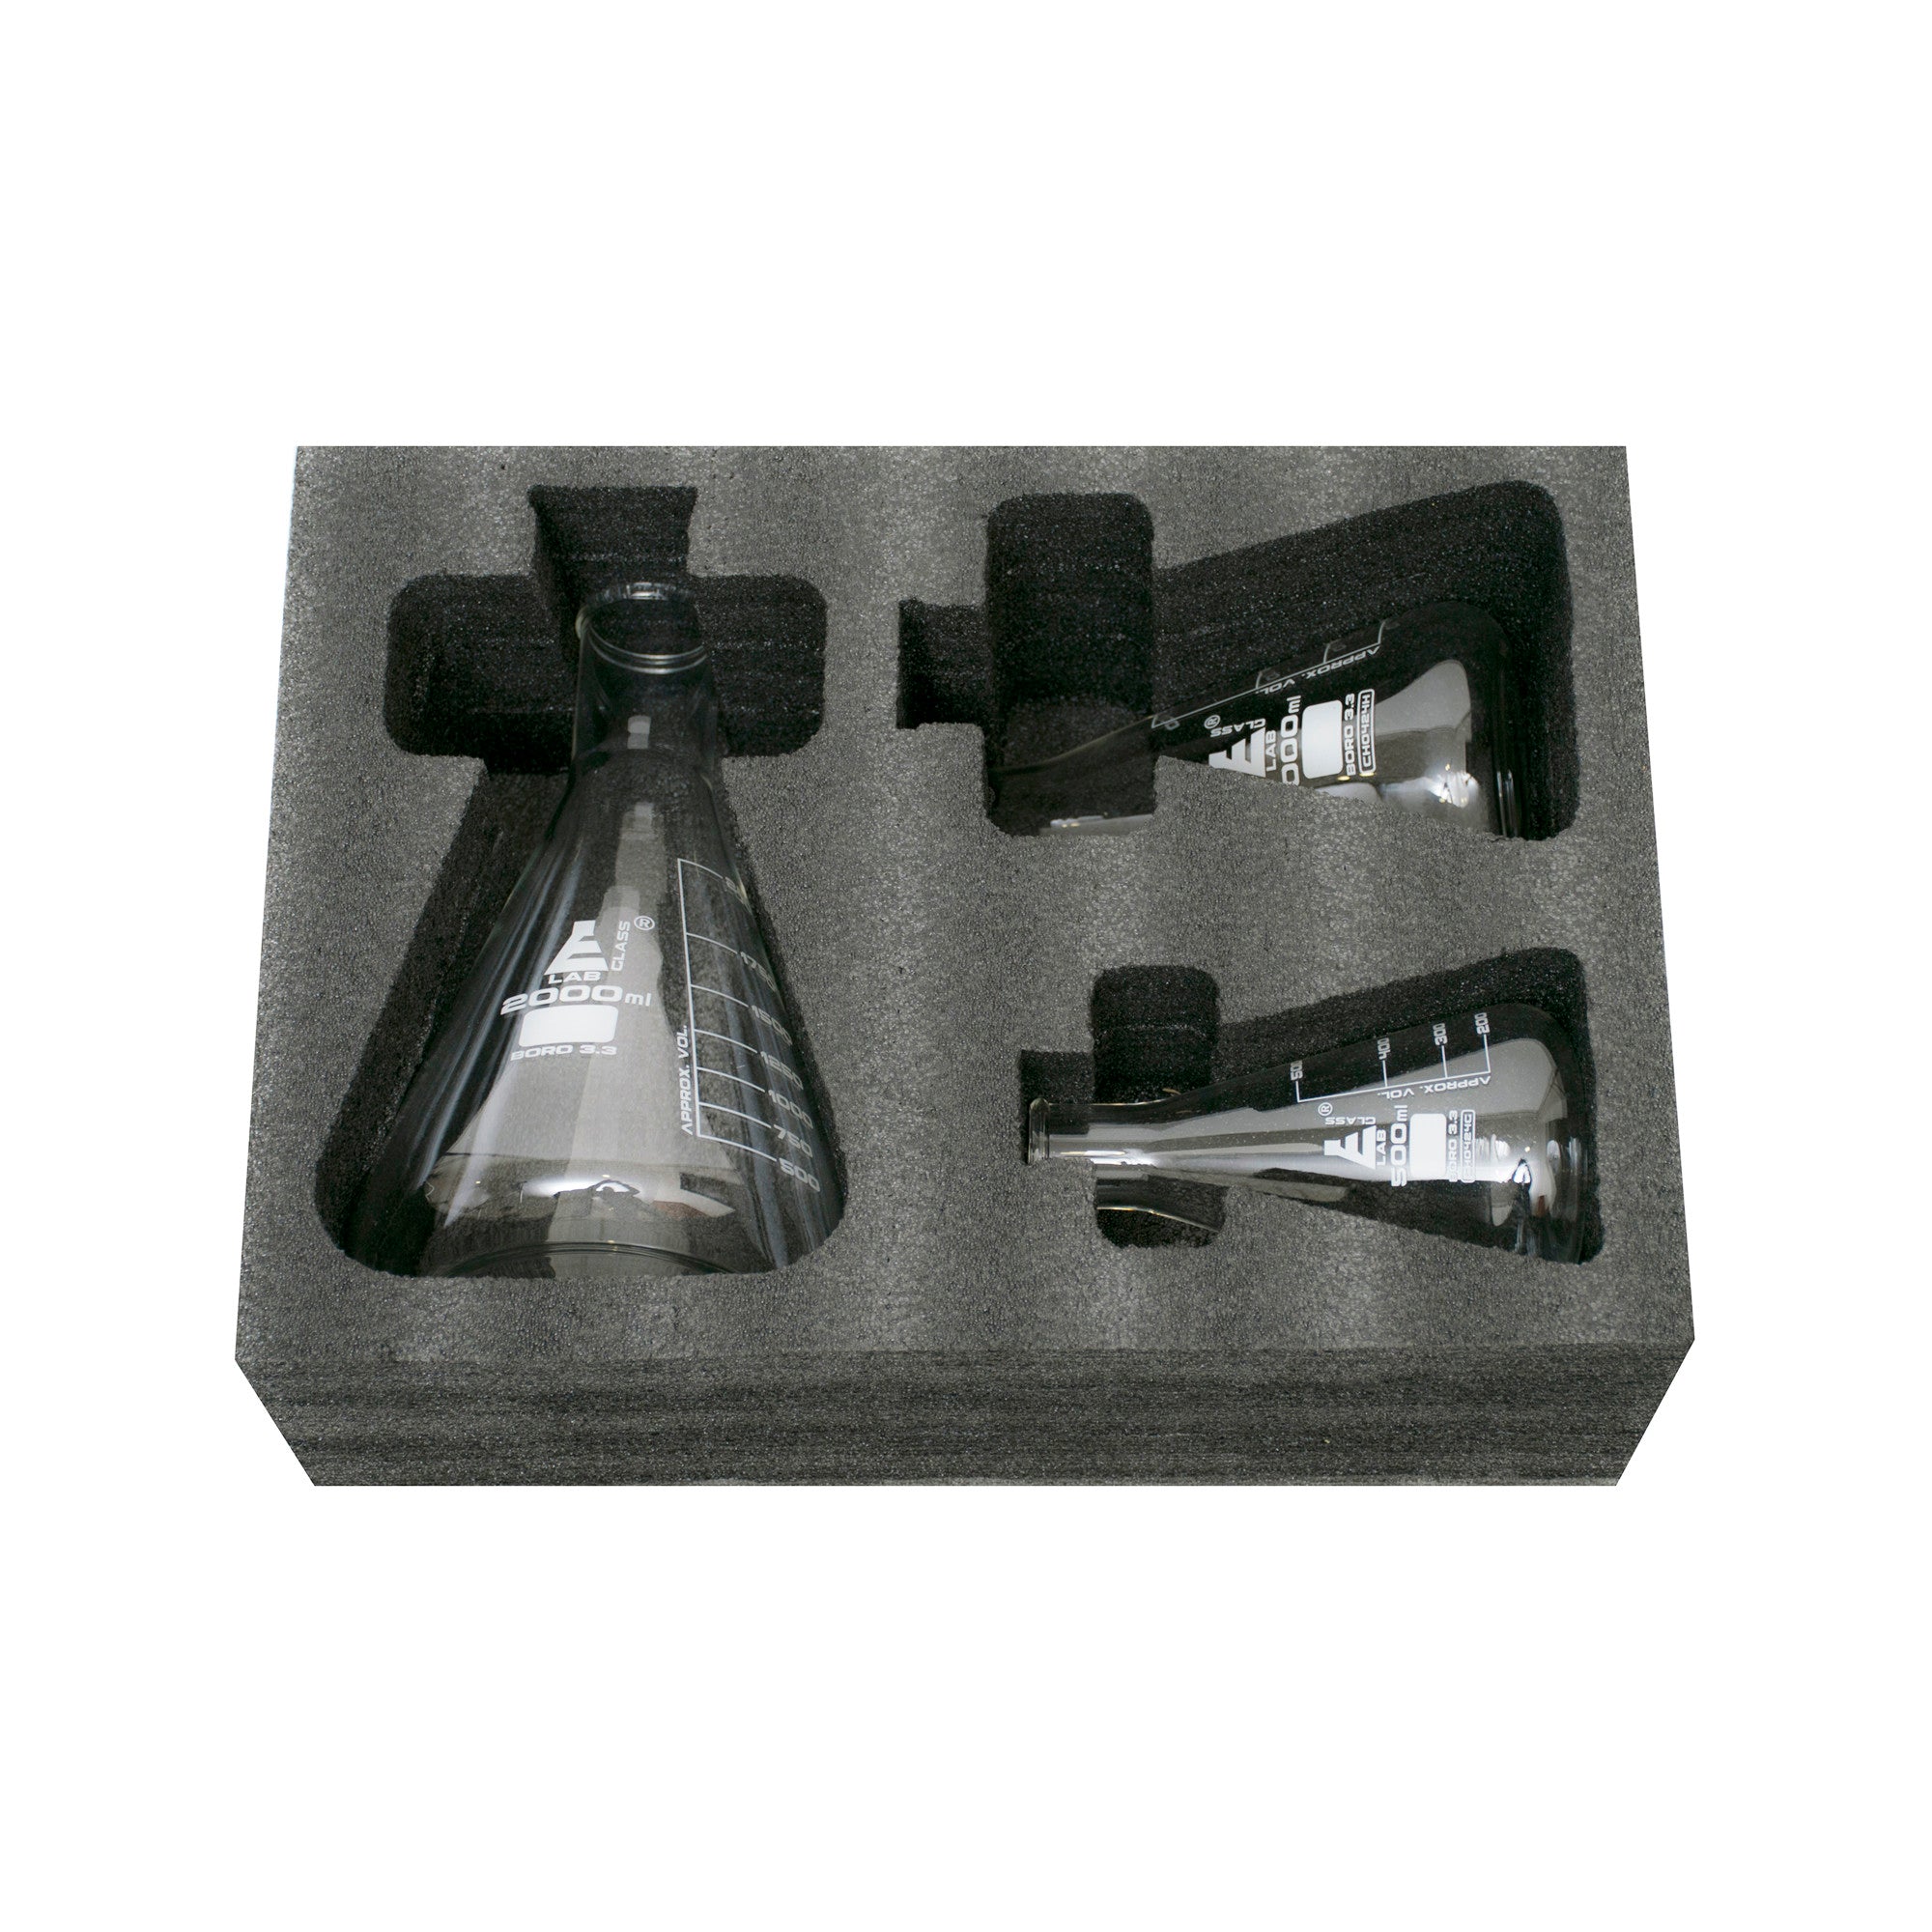 Borosilicate Glass Safety Pack Erlenmeyer Flask Set (500ml, 1000ml, 2000ml), Graduated, Autoclavable